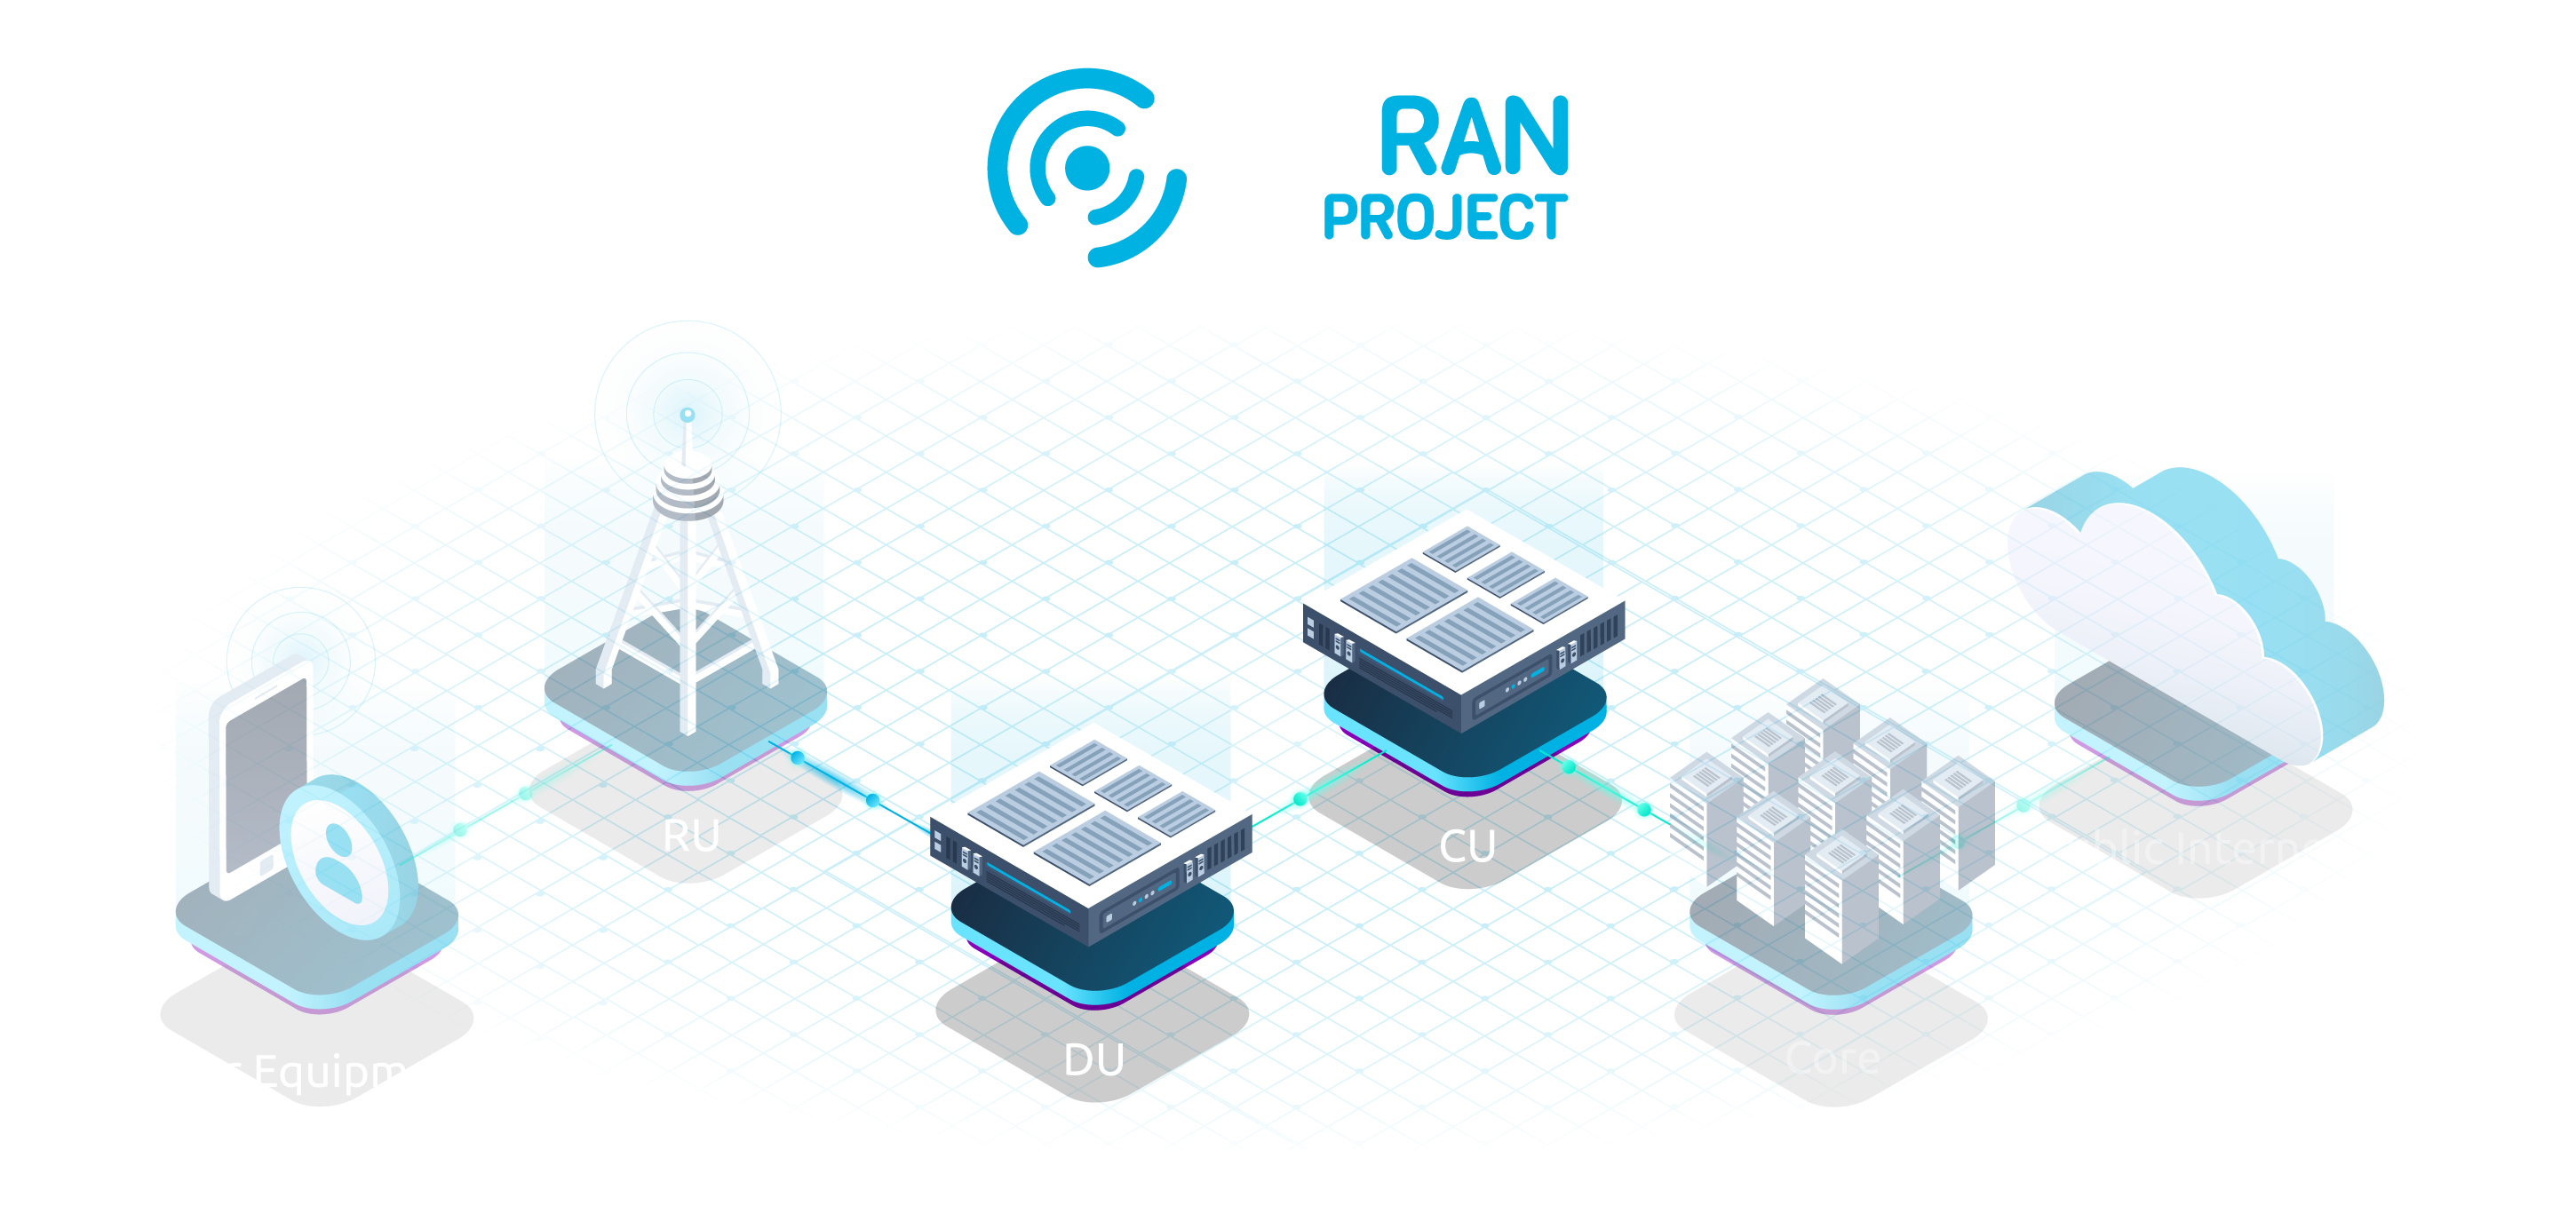 5g - srsRAN Project